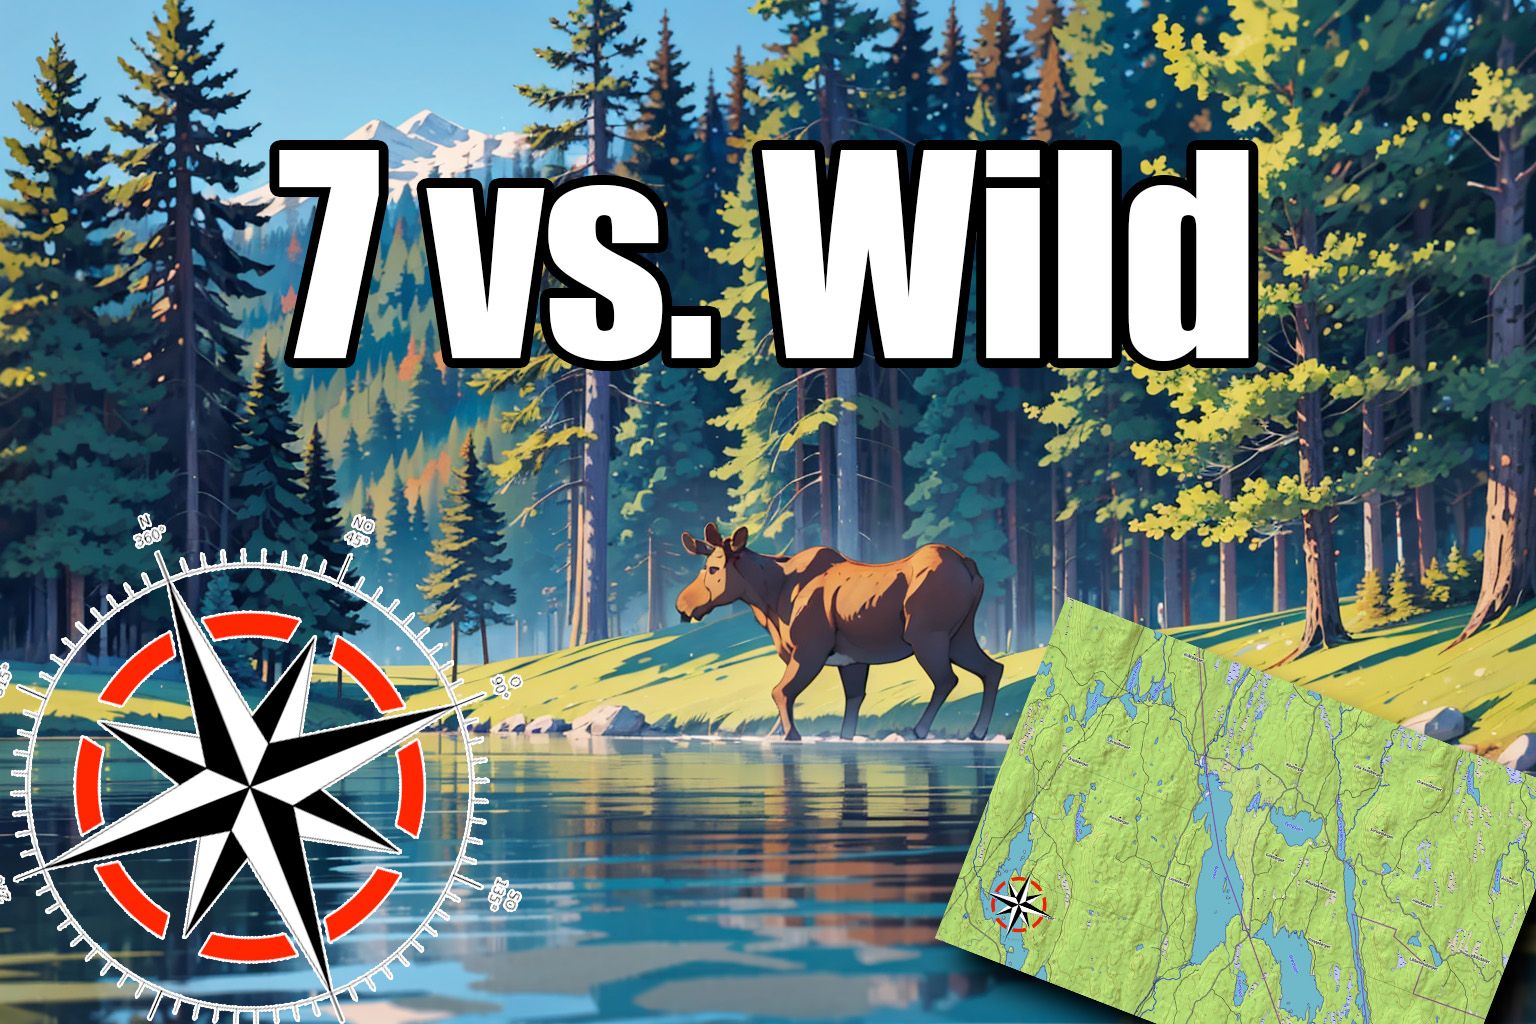 7 vs Wild: Where to watch 7 vs Wild?